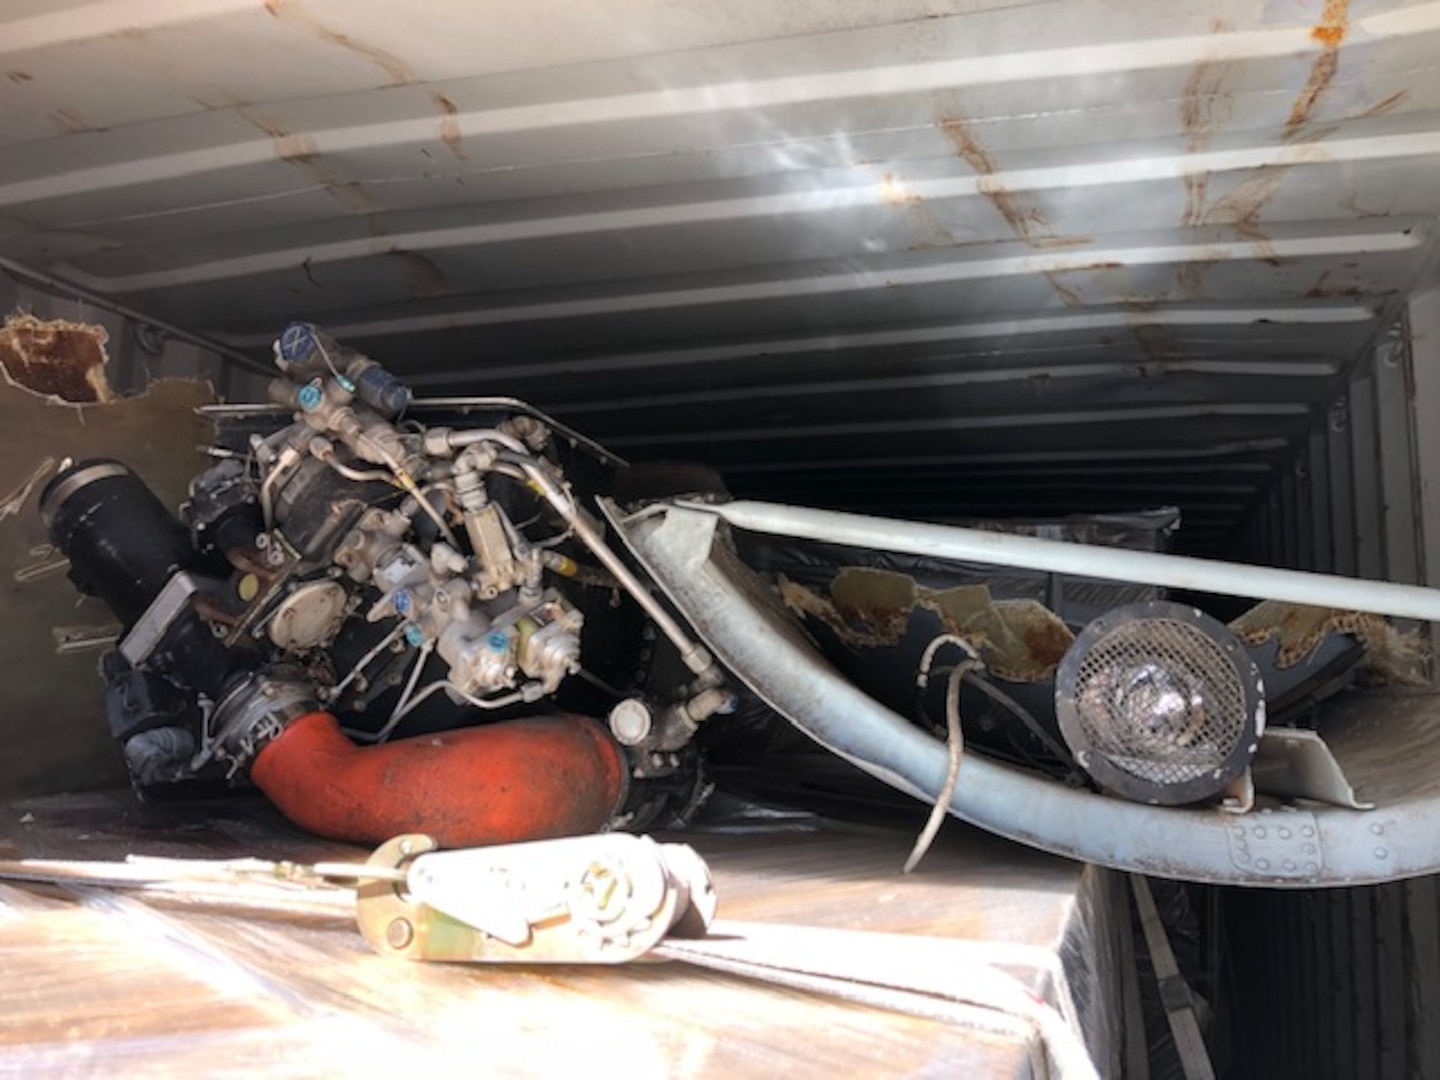 Wreckage from a CV-22 Osprey mishap in 2012 awaits hazardous waste disposal.